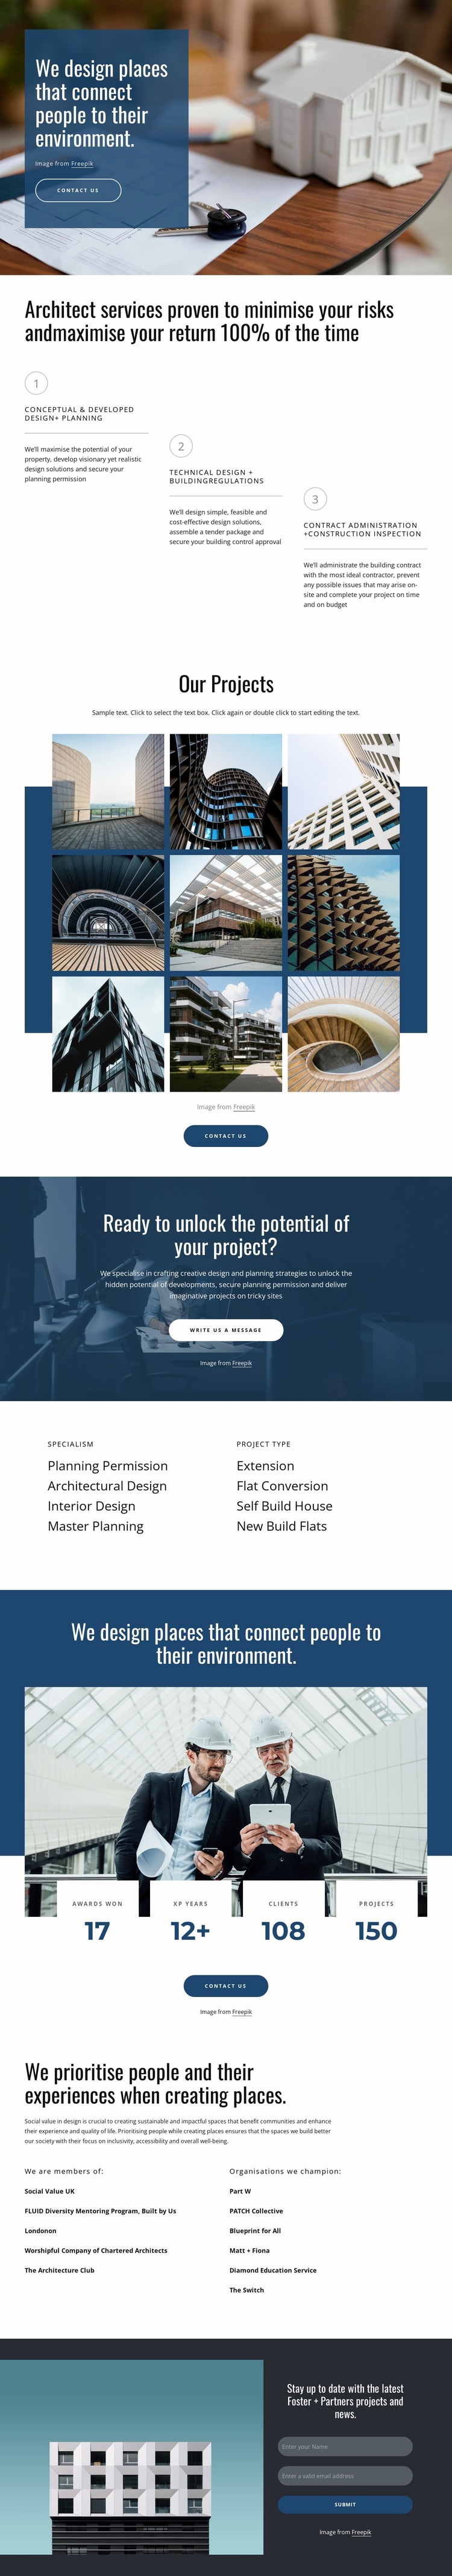 We design amazing projects Website Builder Templates